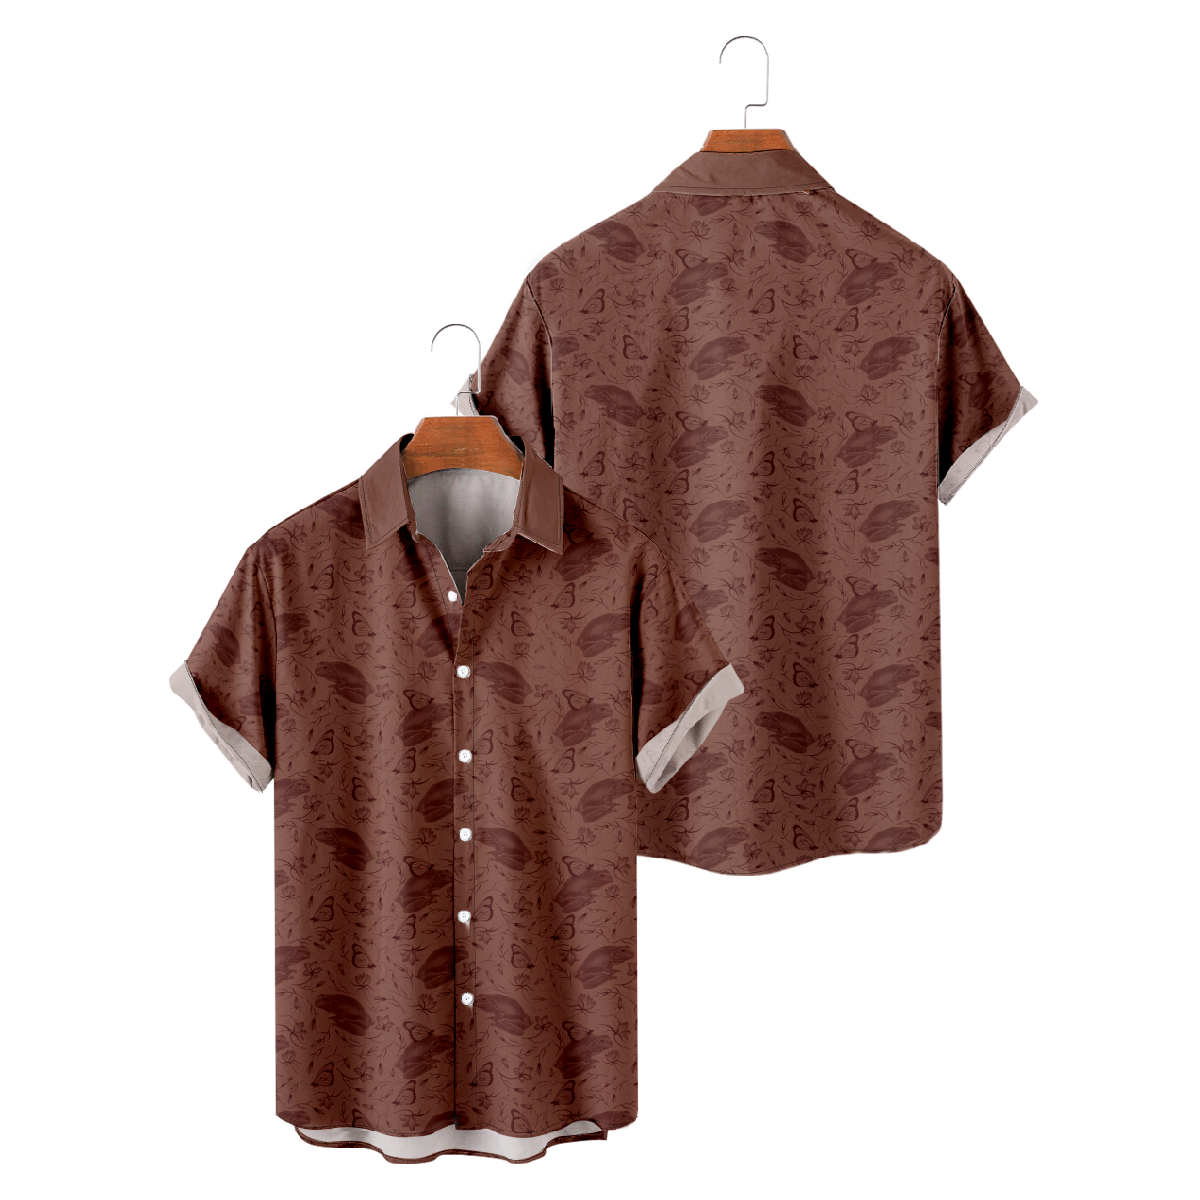 Men's Short Sleeve Shirt Frog Print Coffee Brown Shirt uhoodie Casual Shirt